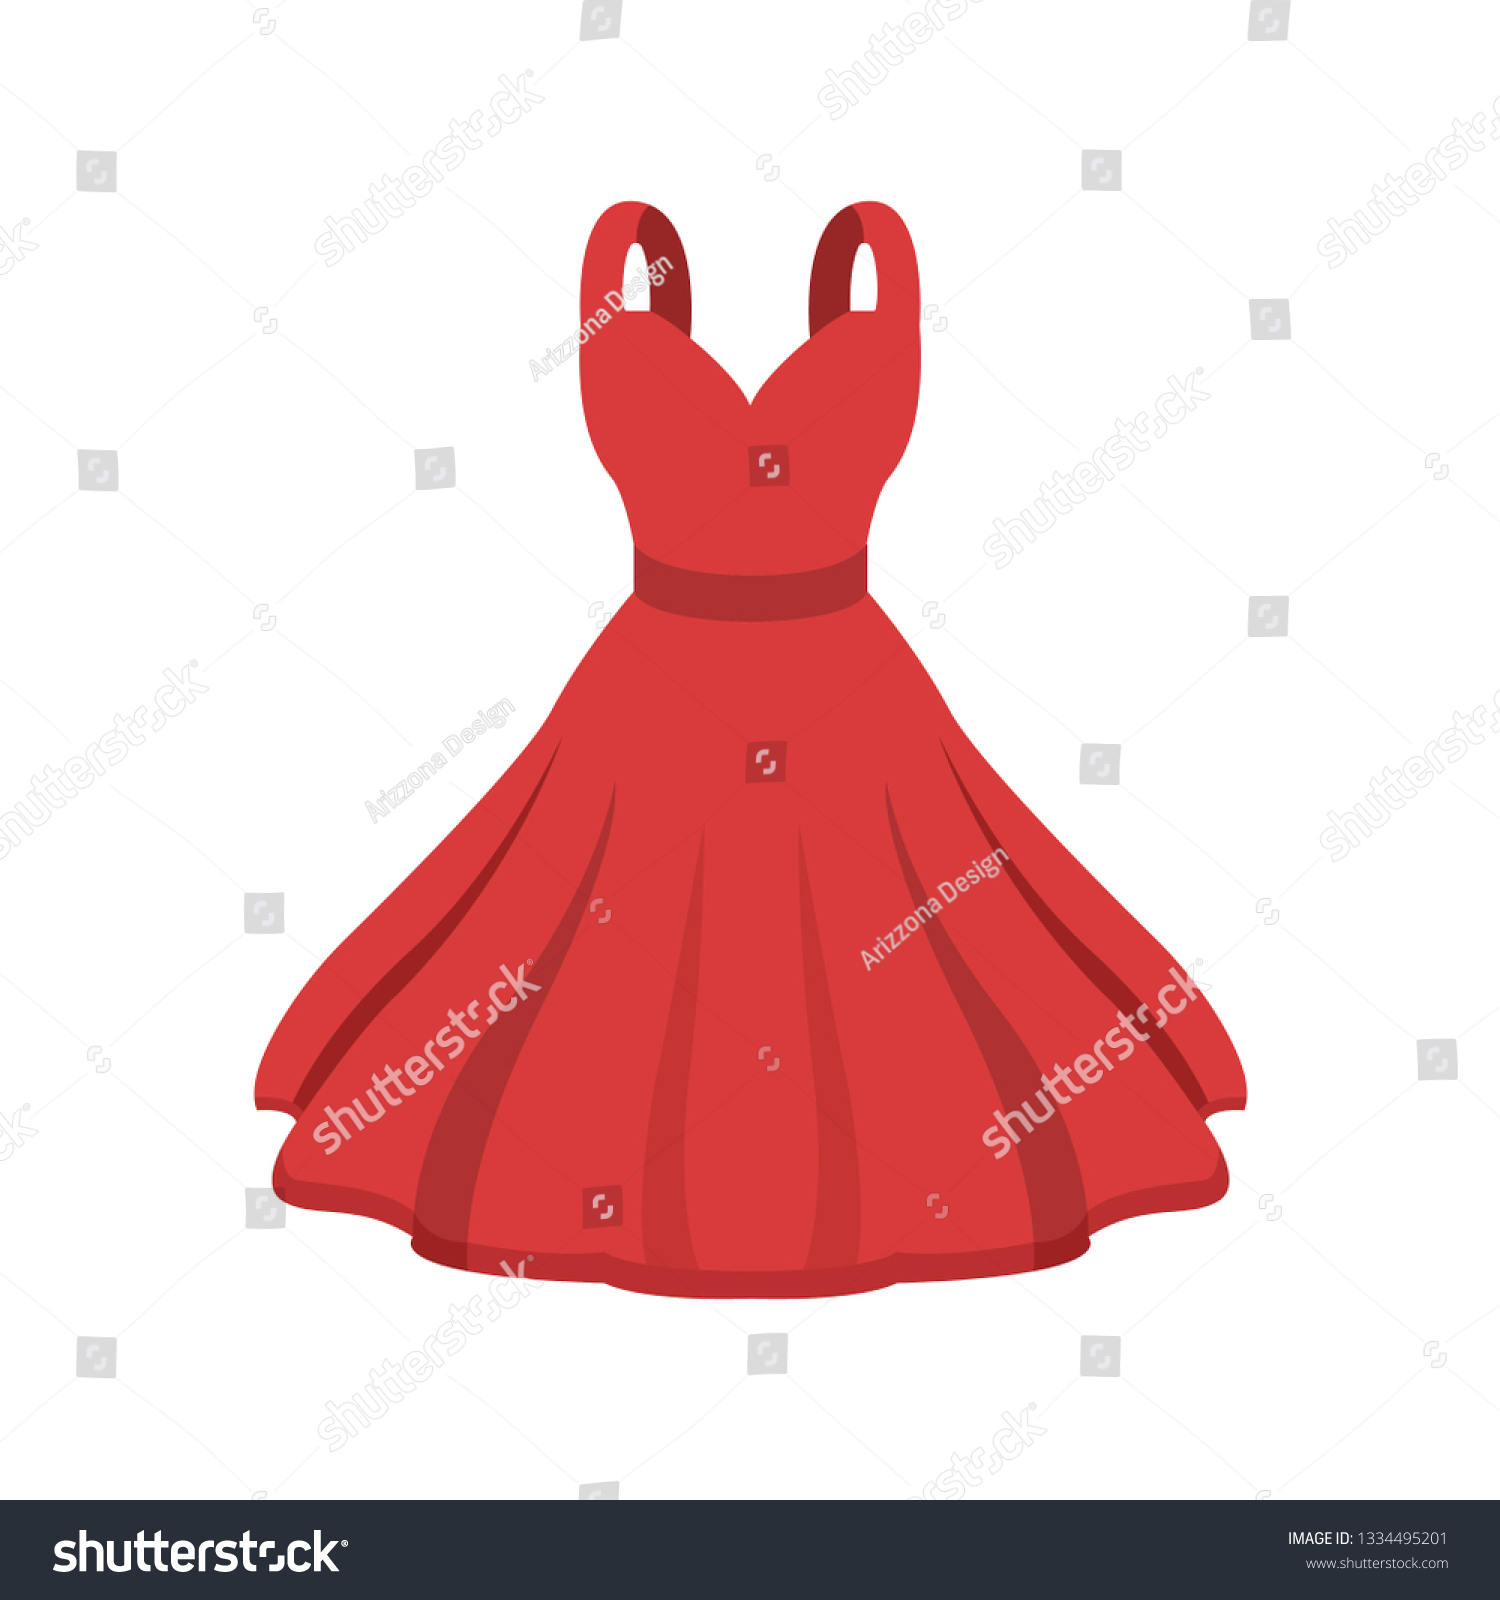 Red Dress Emoji 1334495201